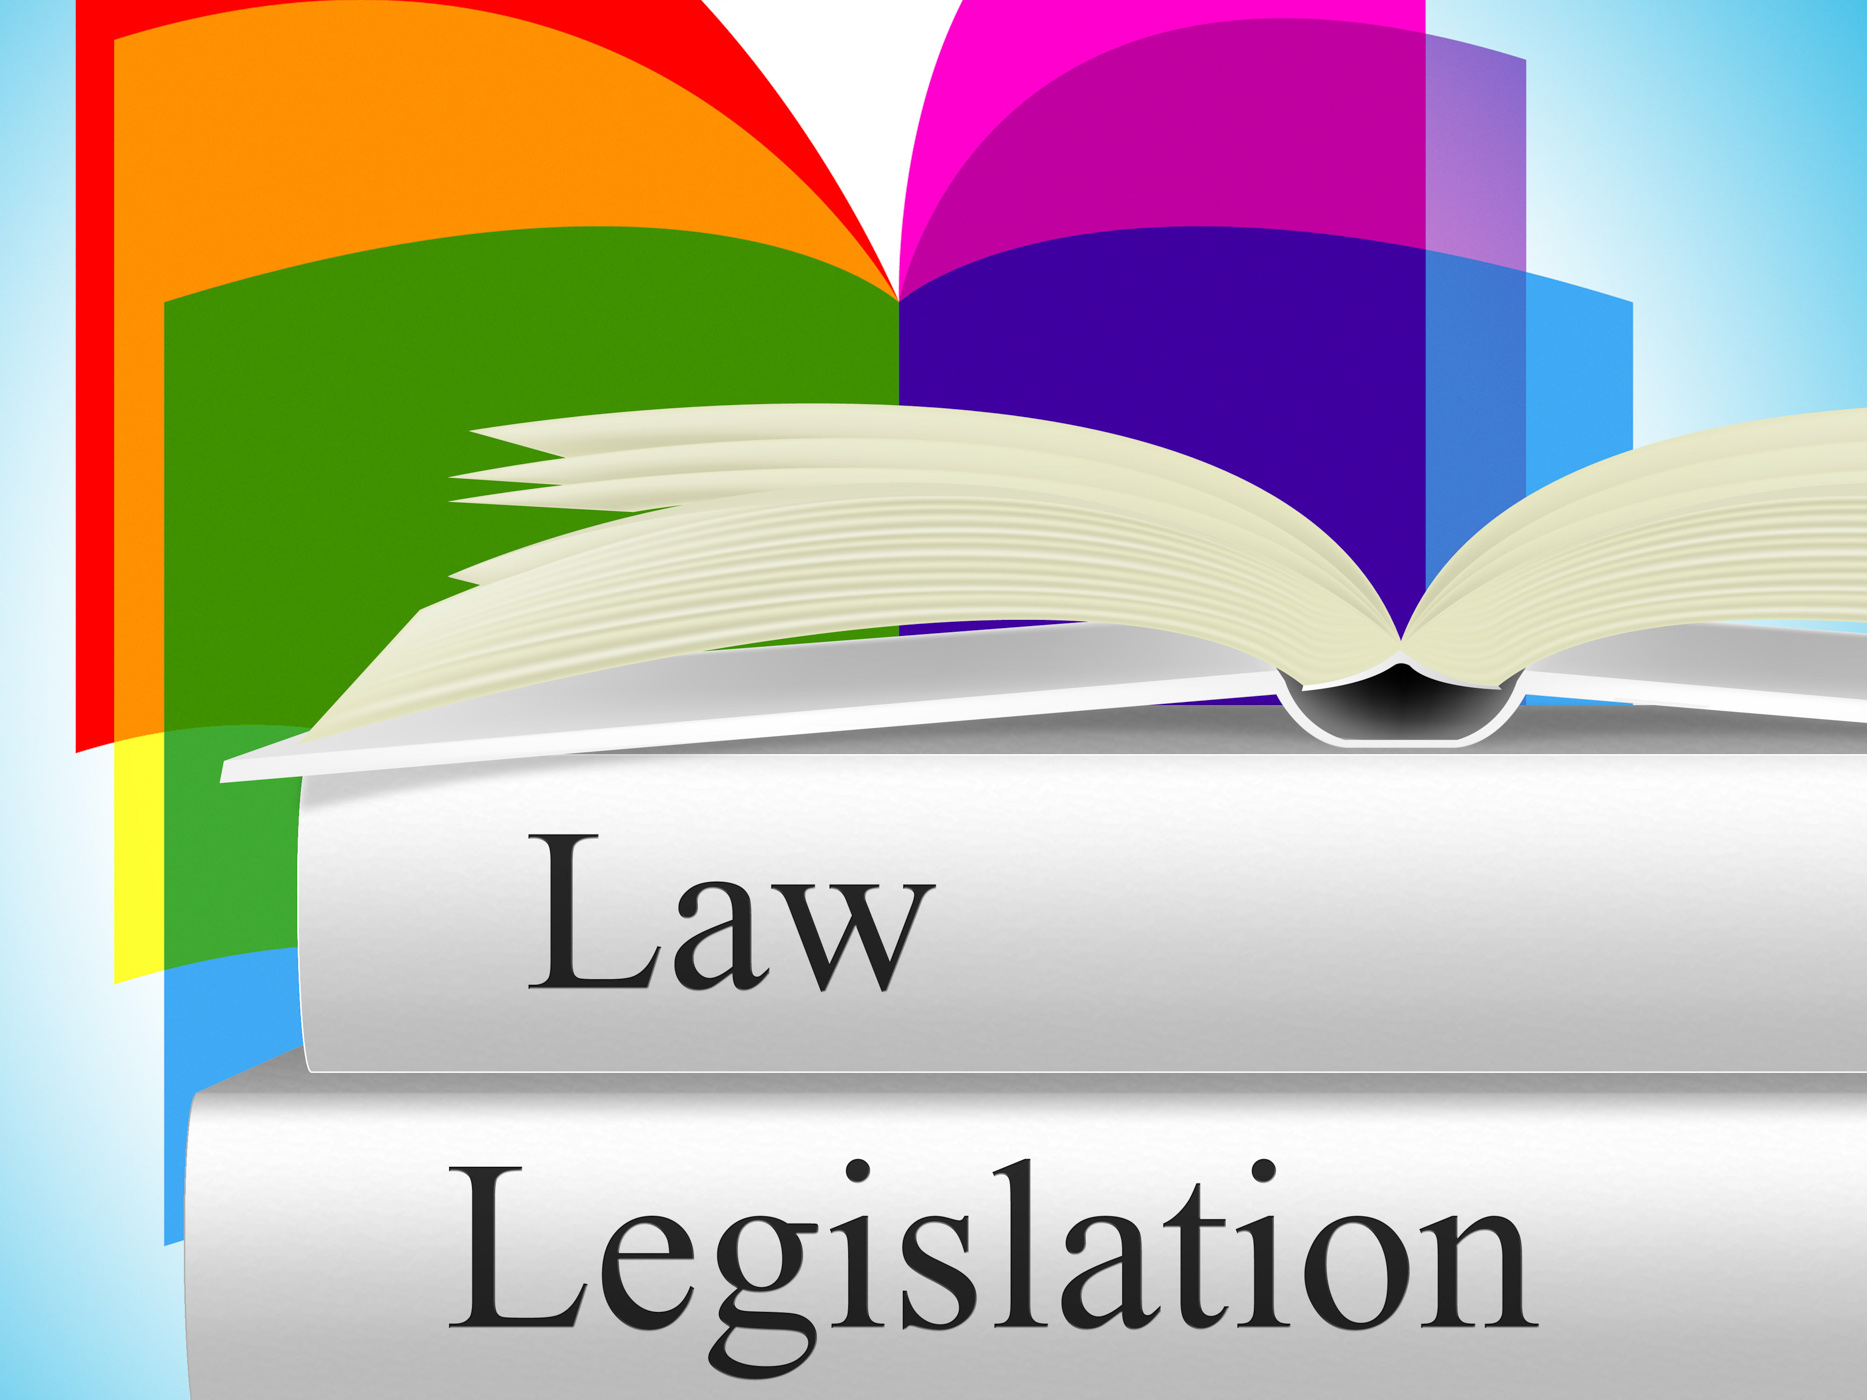 Legislation law represents legality crime and juridical photo